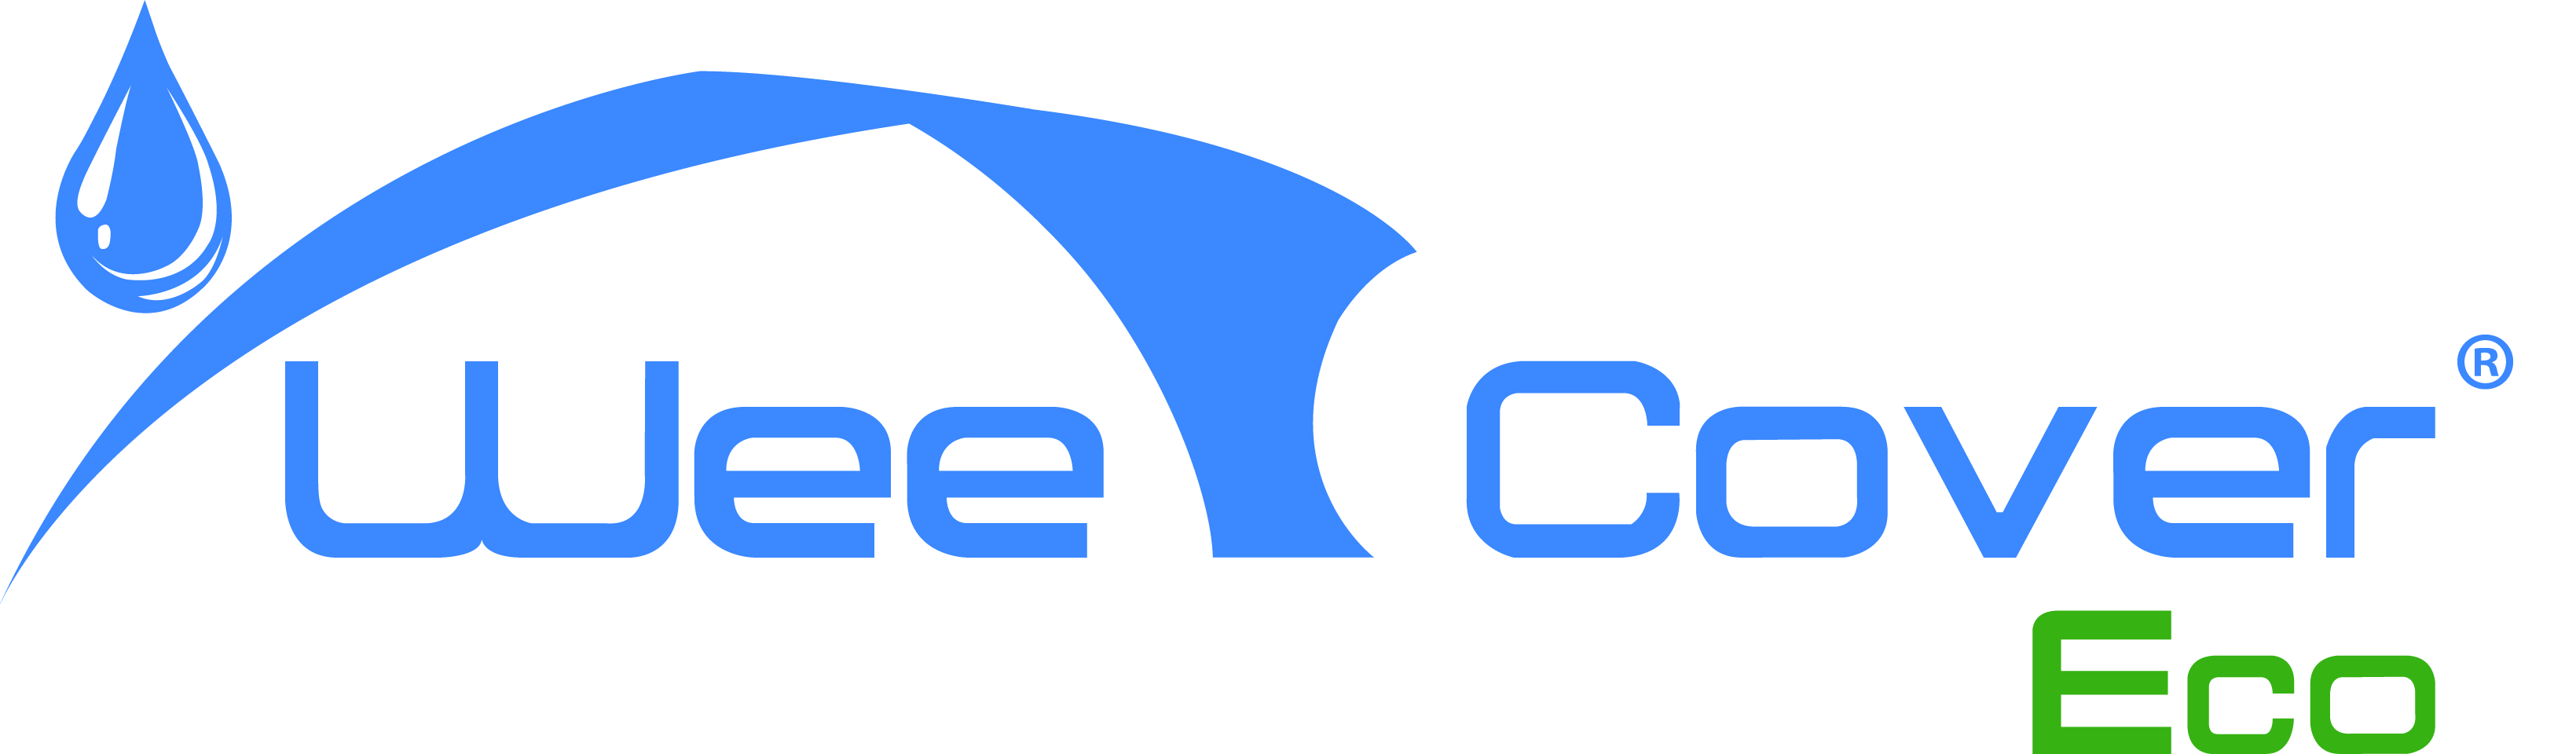 weecover eco logo